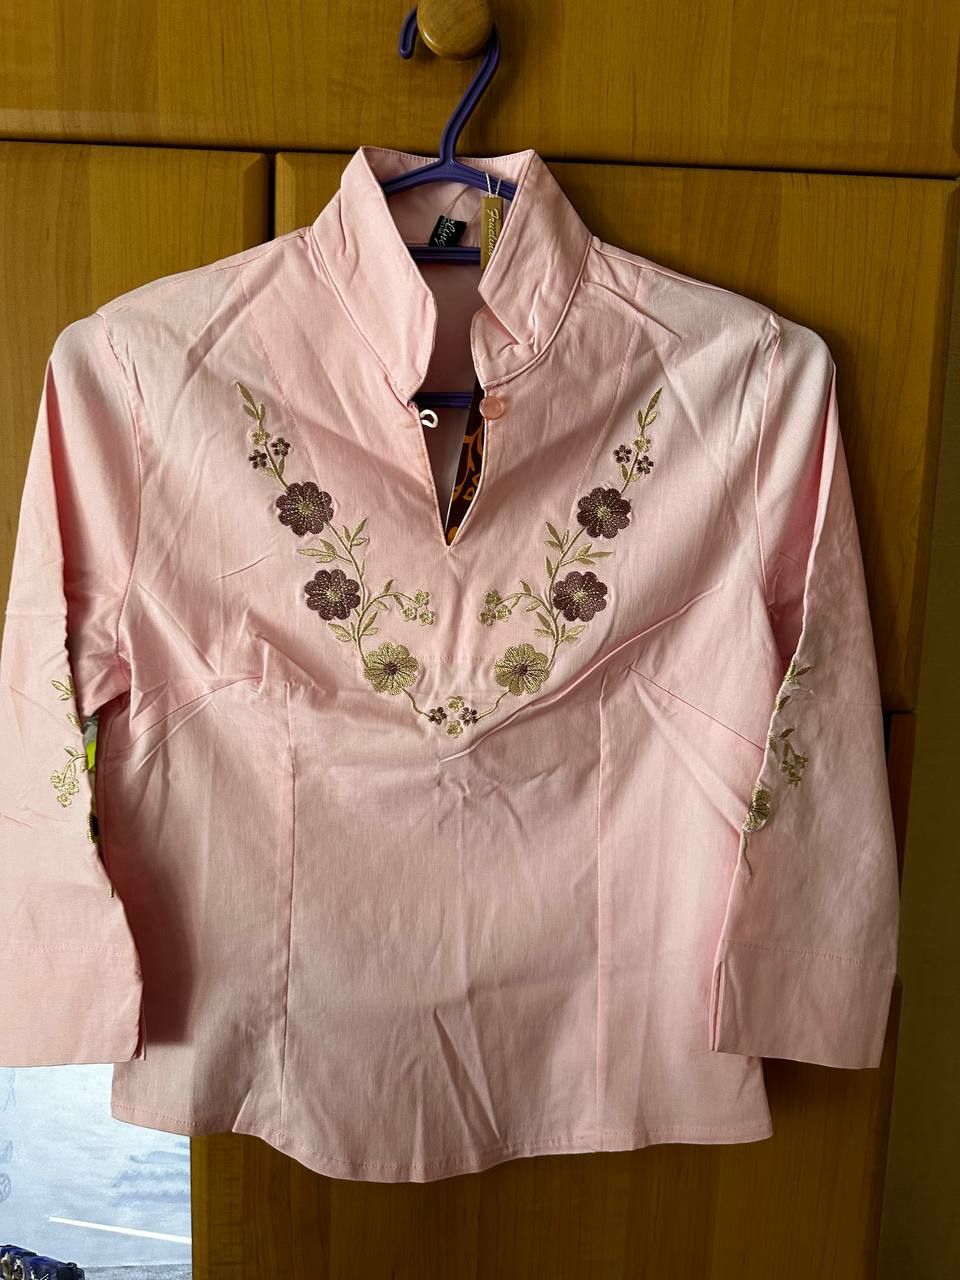 Блуза з вишивкою